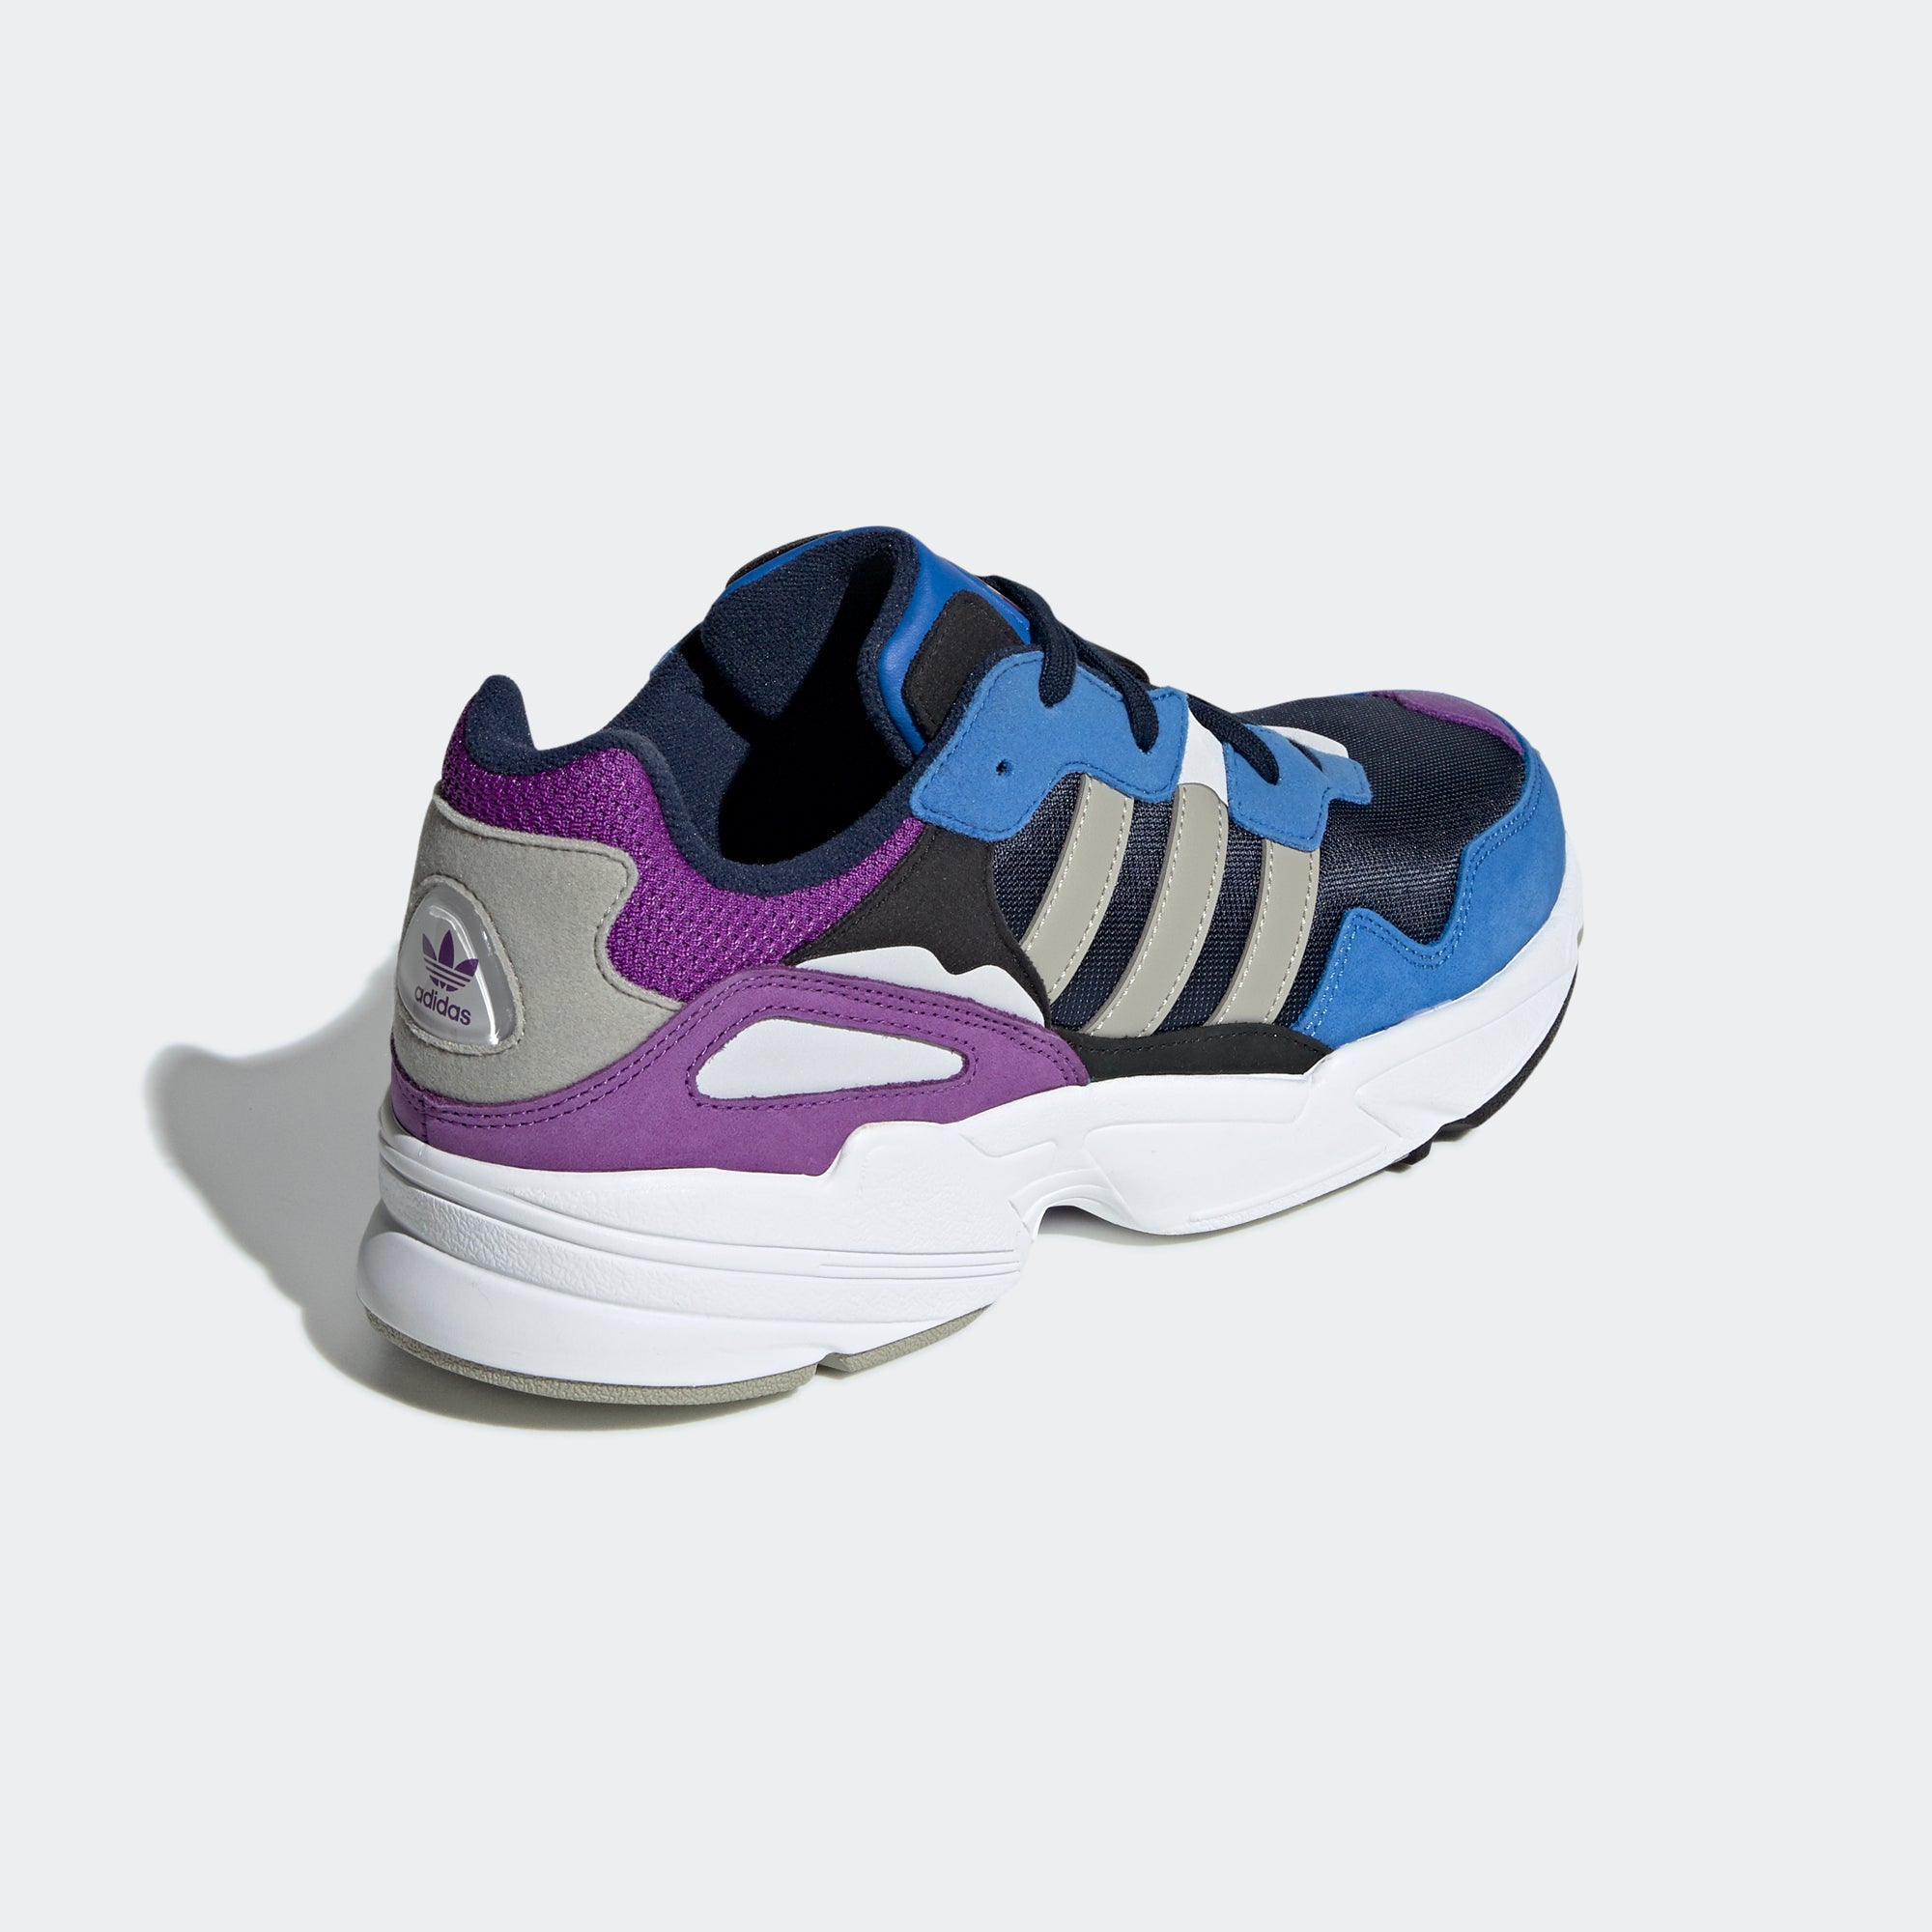 adidas yung 96 blue purple